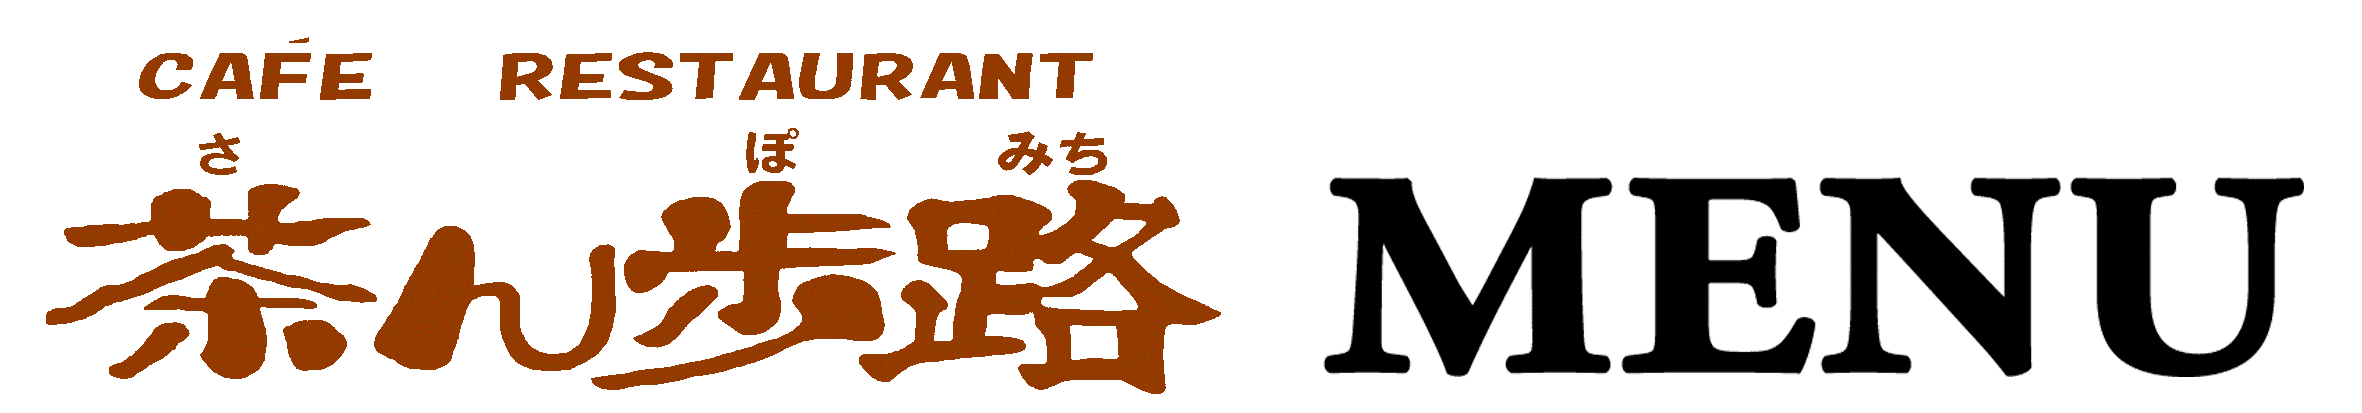 menu&logo